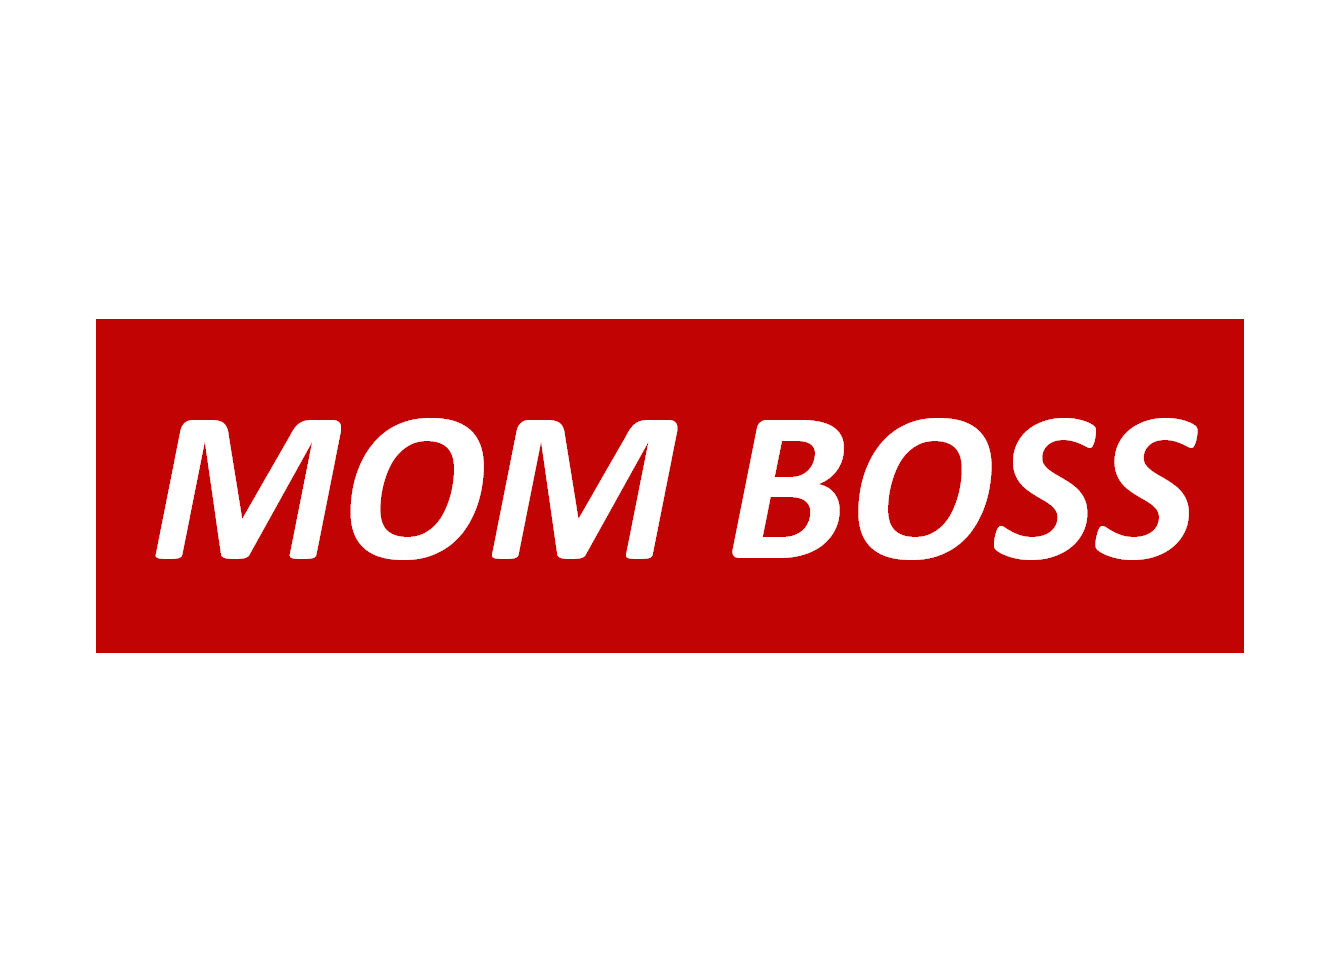 Mom Boss - Black Tee